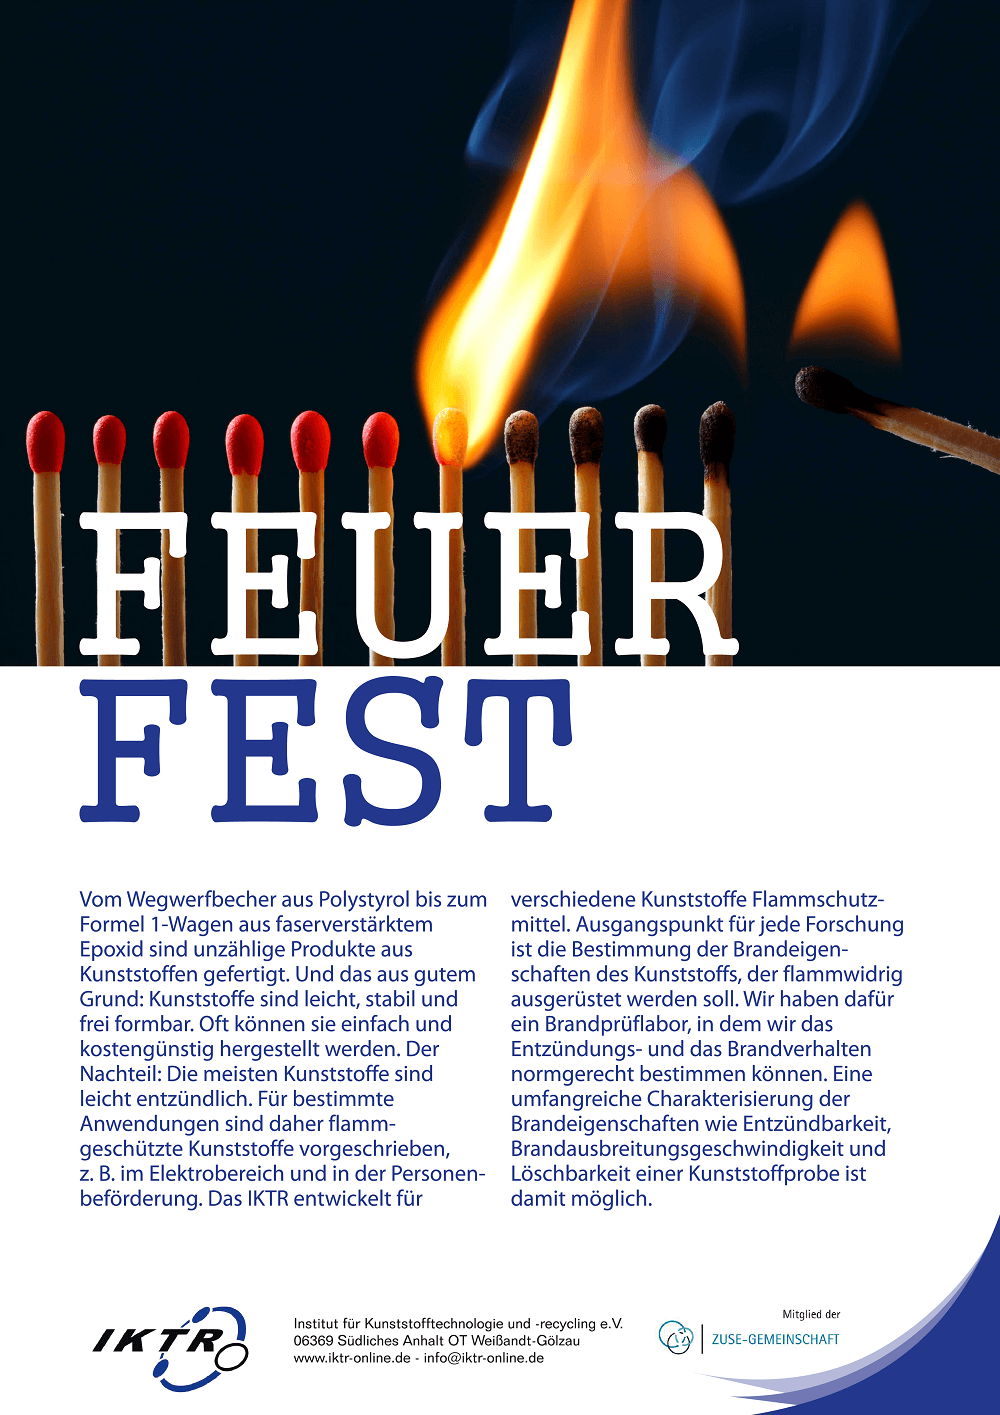 feuerfest1